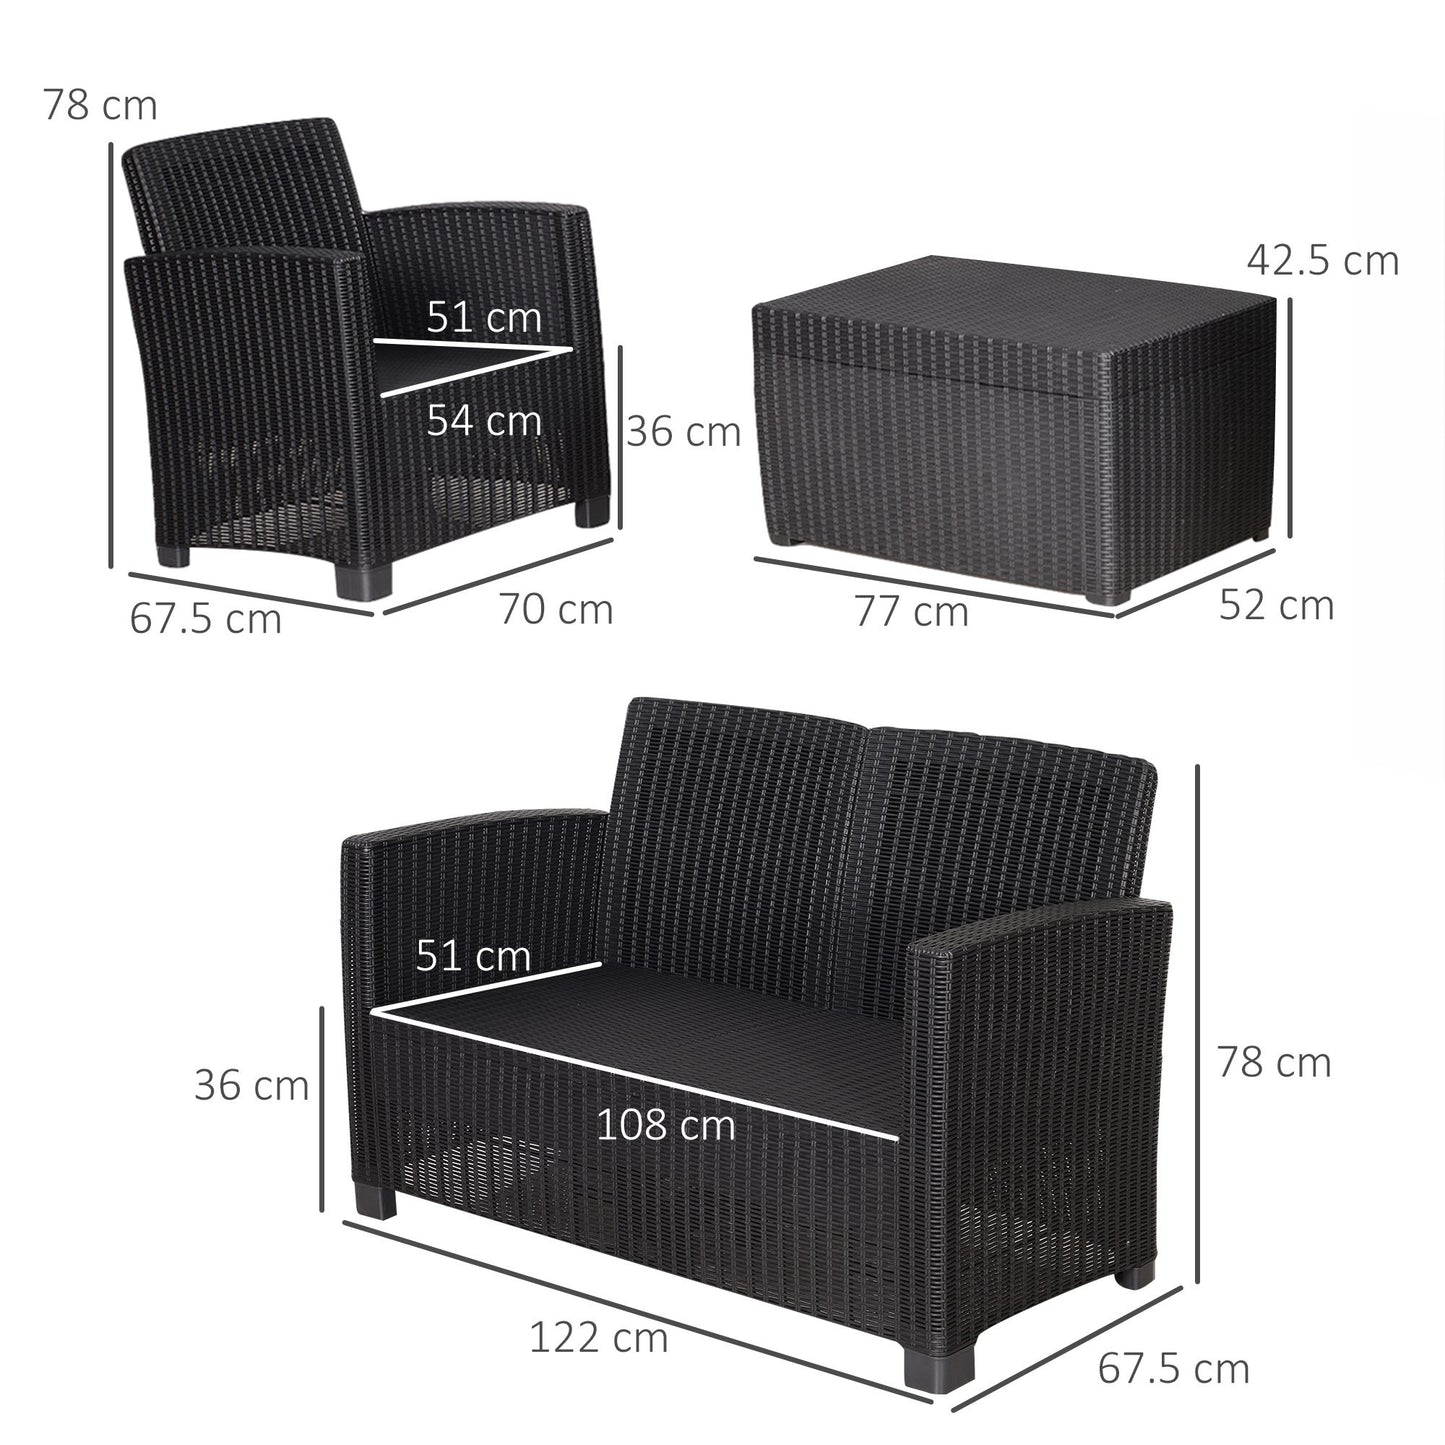 Outsunny 4-Seater PP Rattan Garden Furniture Set Patio Furniture w/ Cushion Black